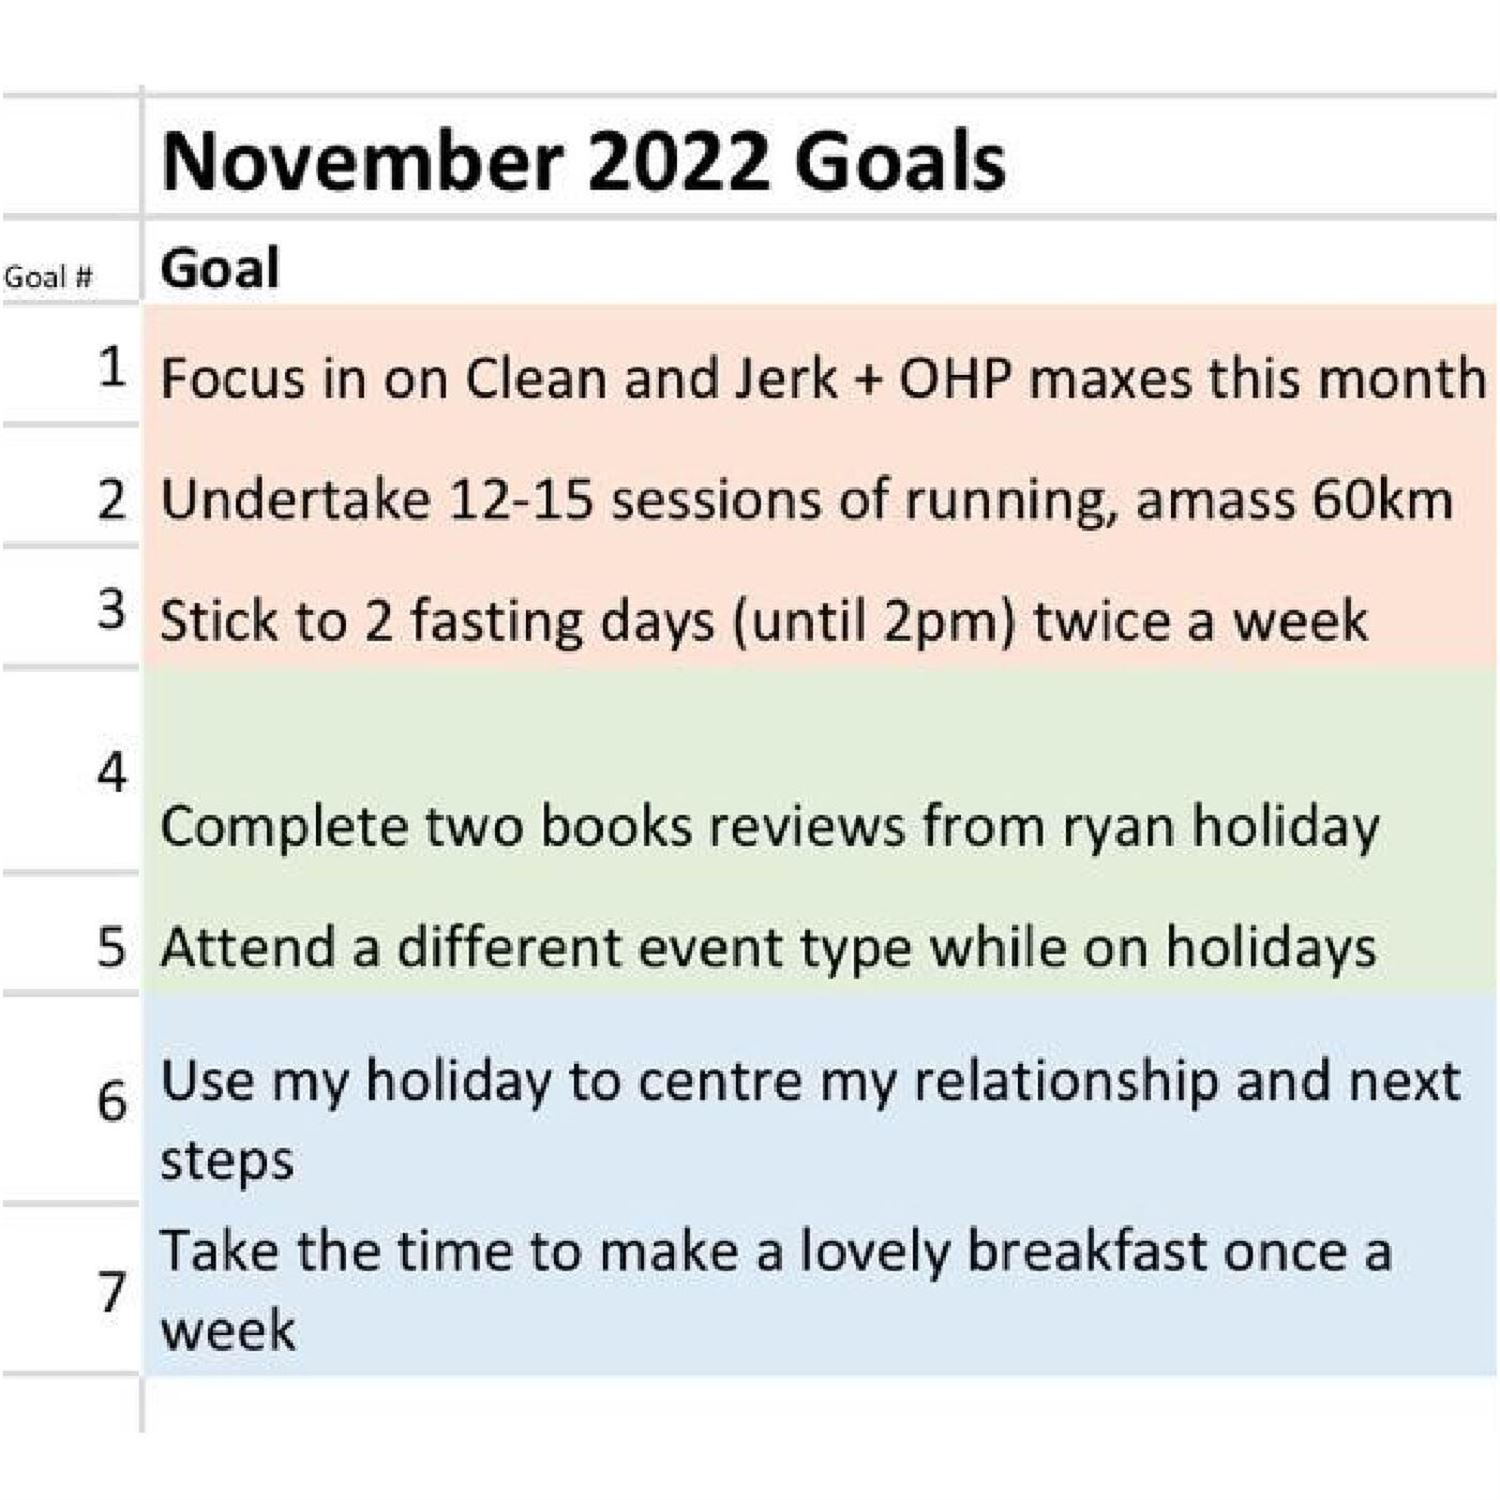 Juan's November Goals